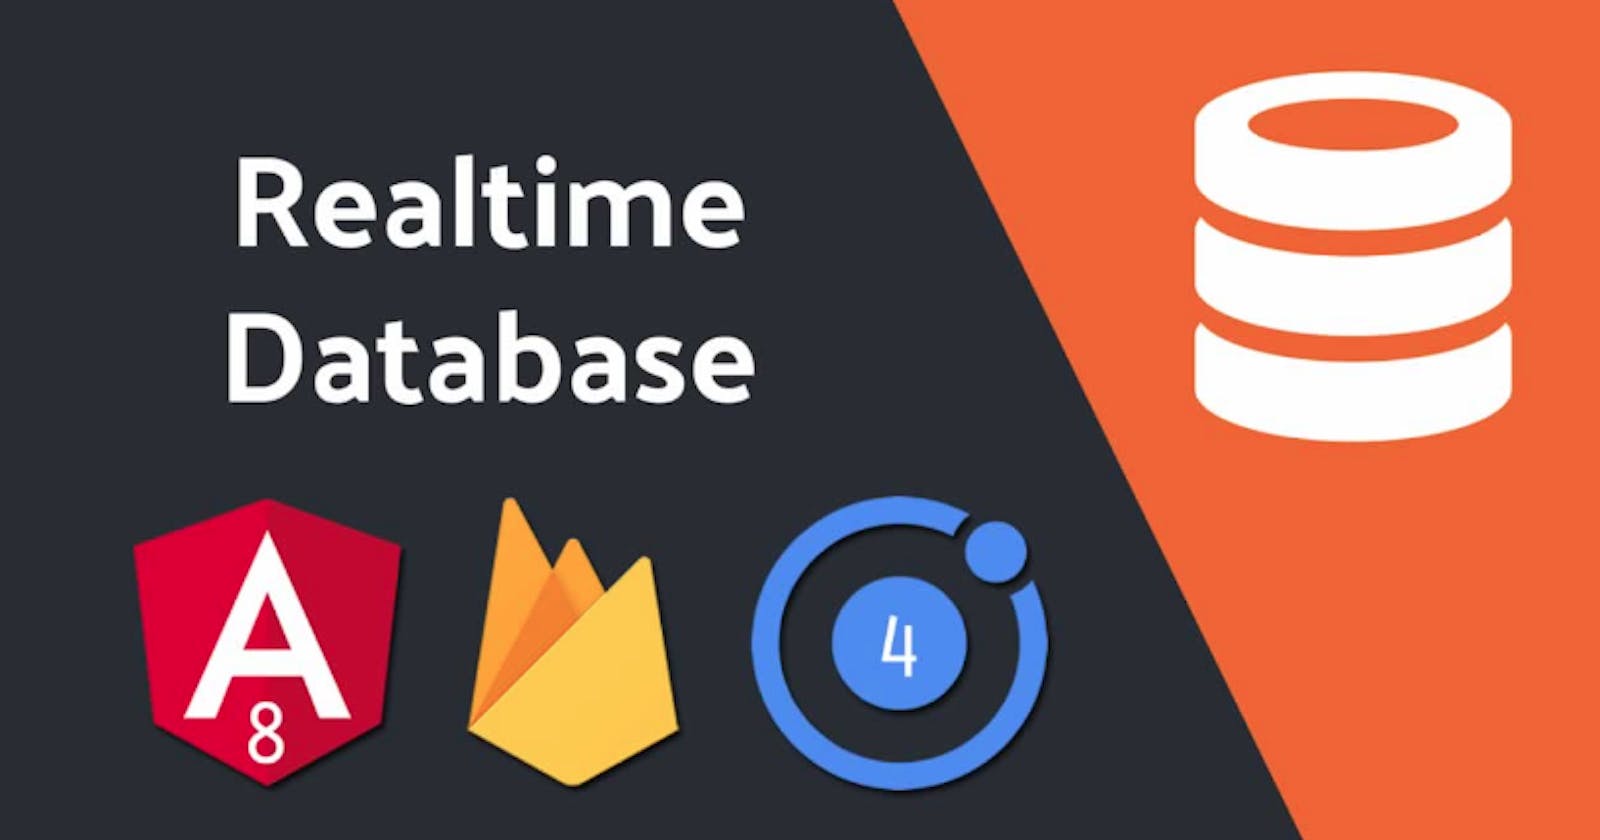 Comment configurer Firebase Realtime Database dans les applications Ionic 4 et Angular 8?